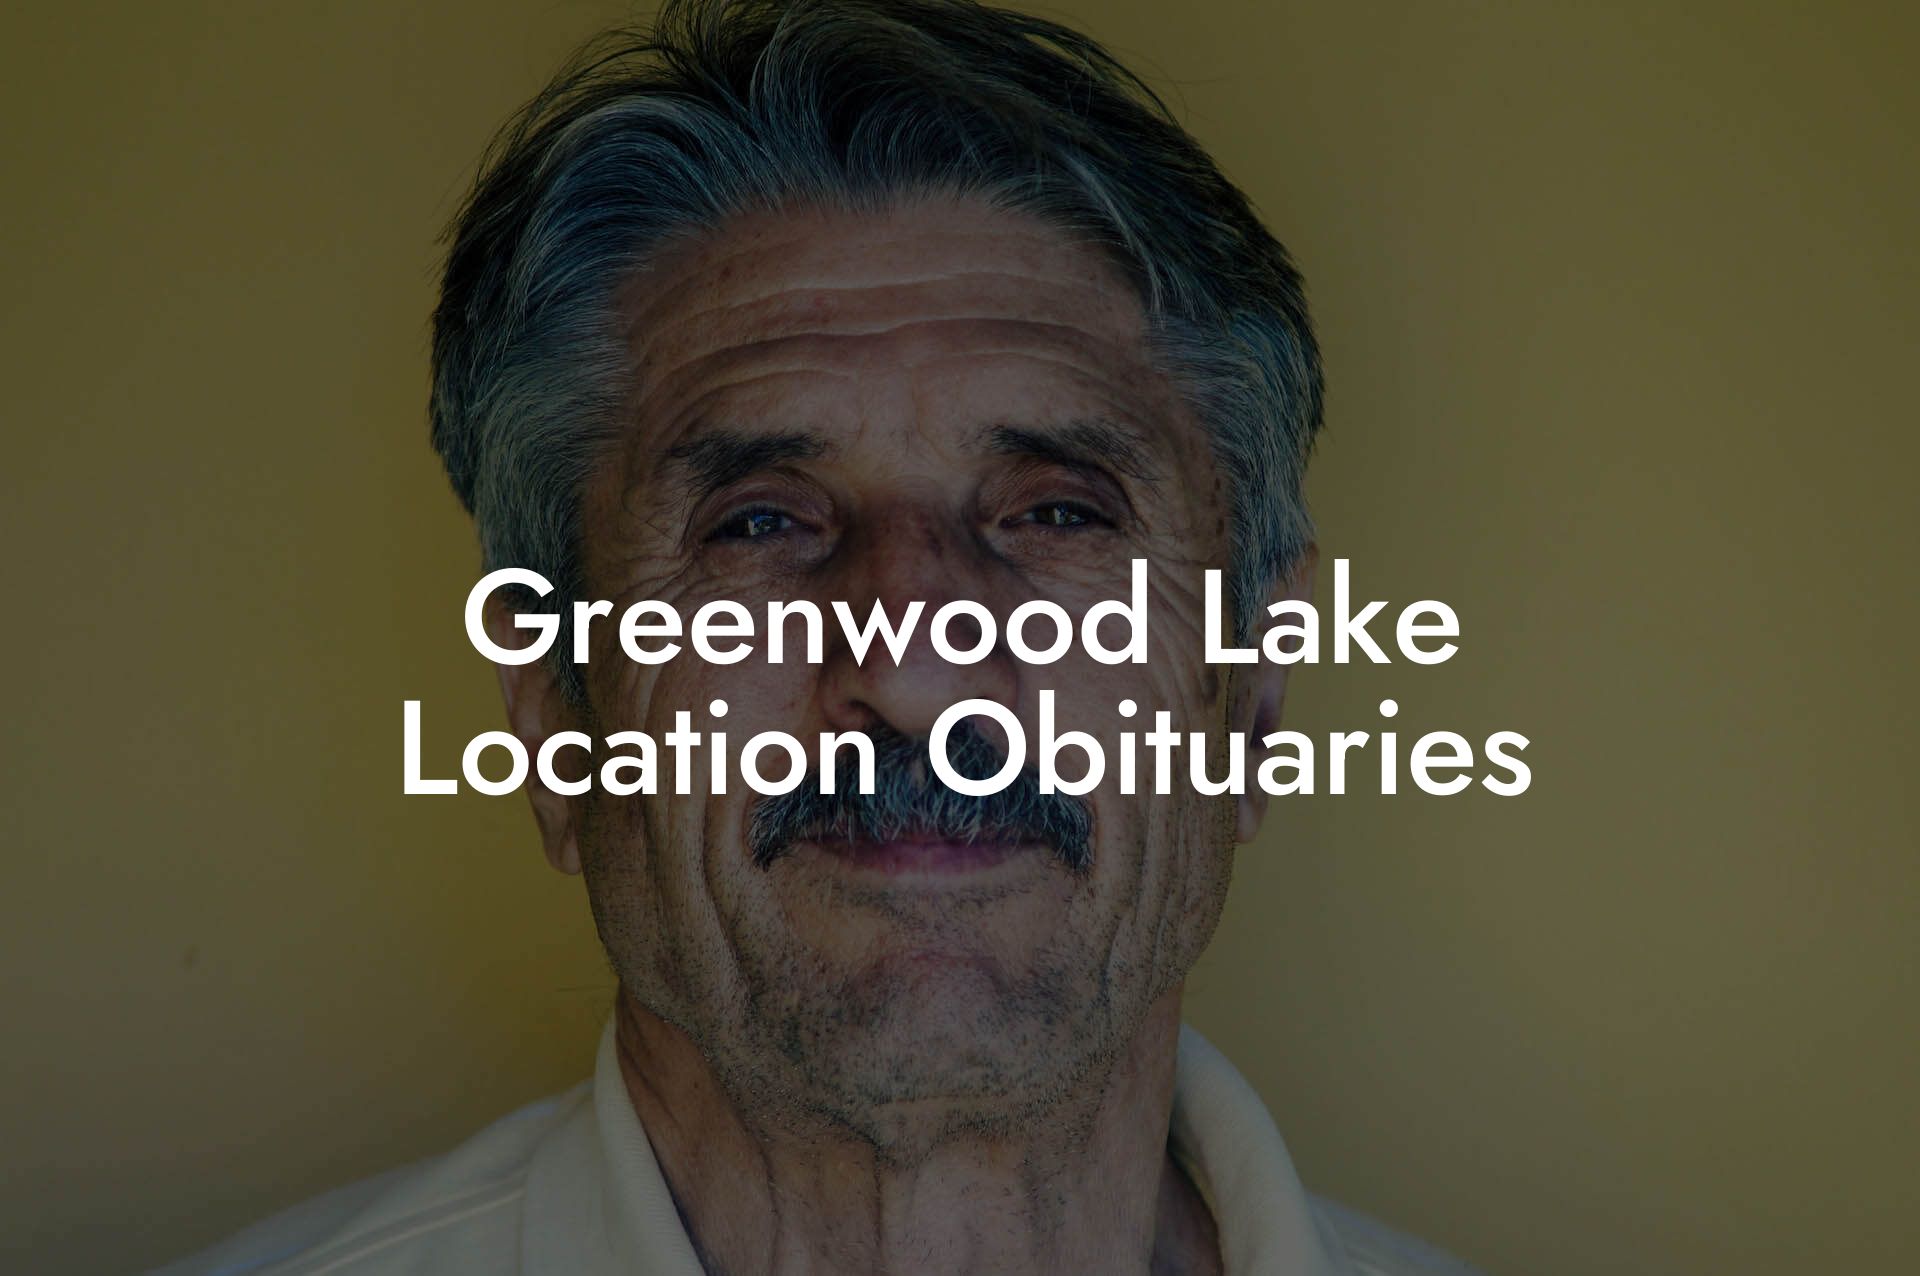 Greenwood Lake Location Obituaries